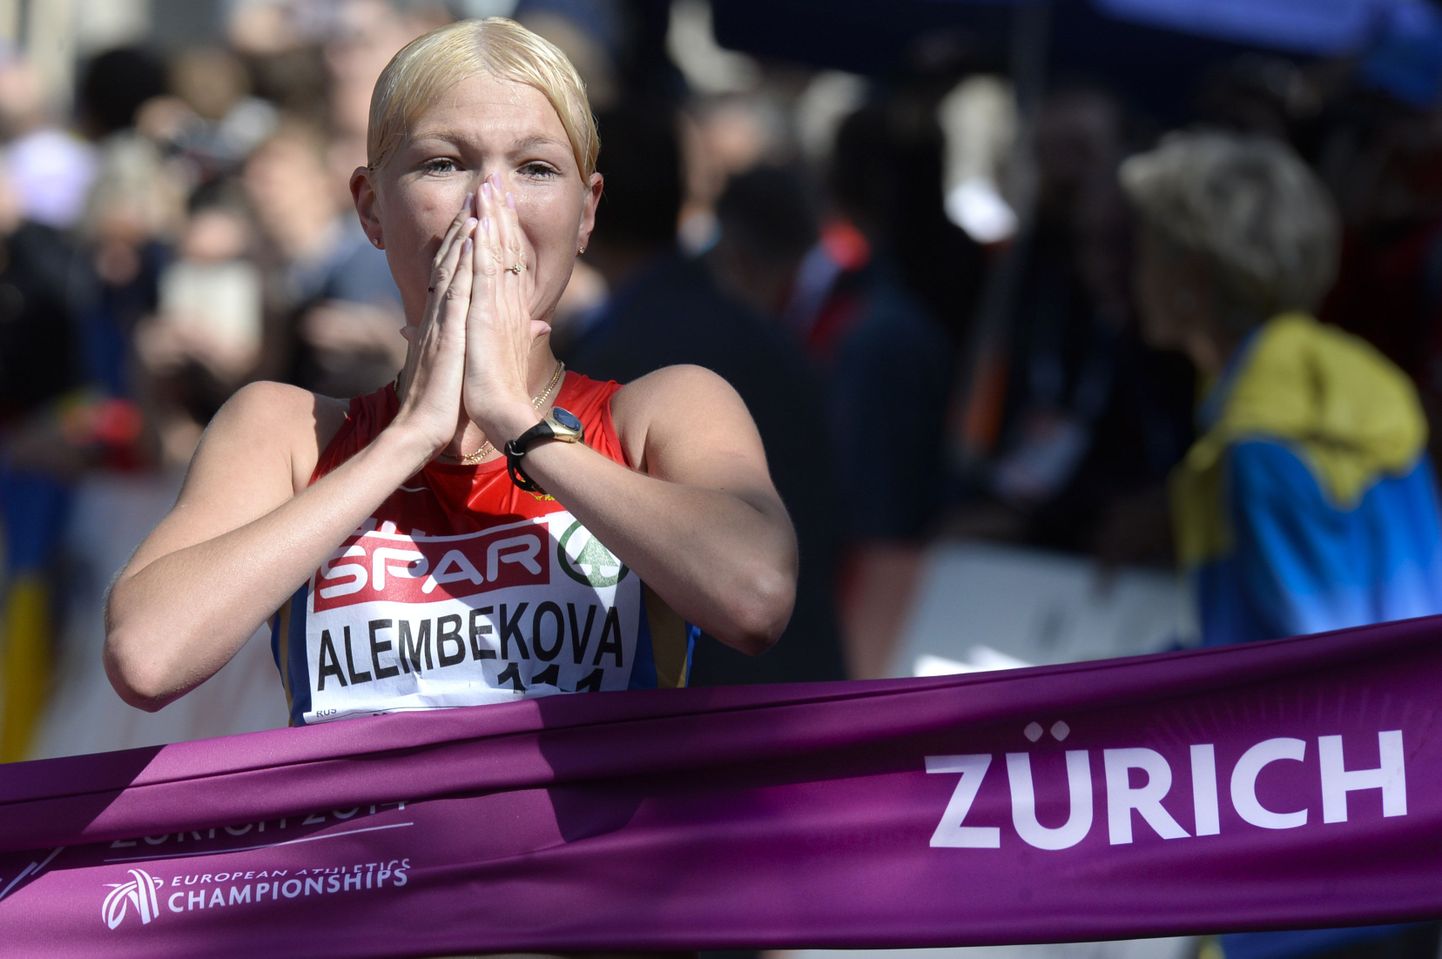 Elmira Alembekova Zürichi EMil võitjana finišis.